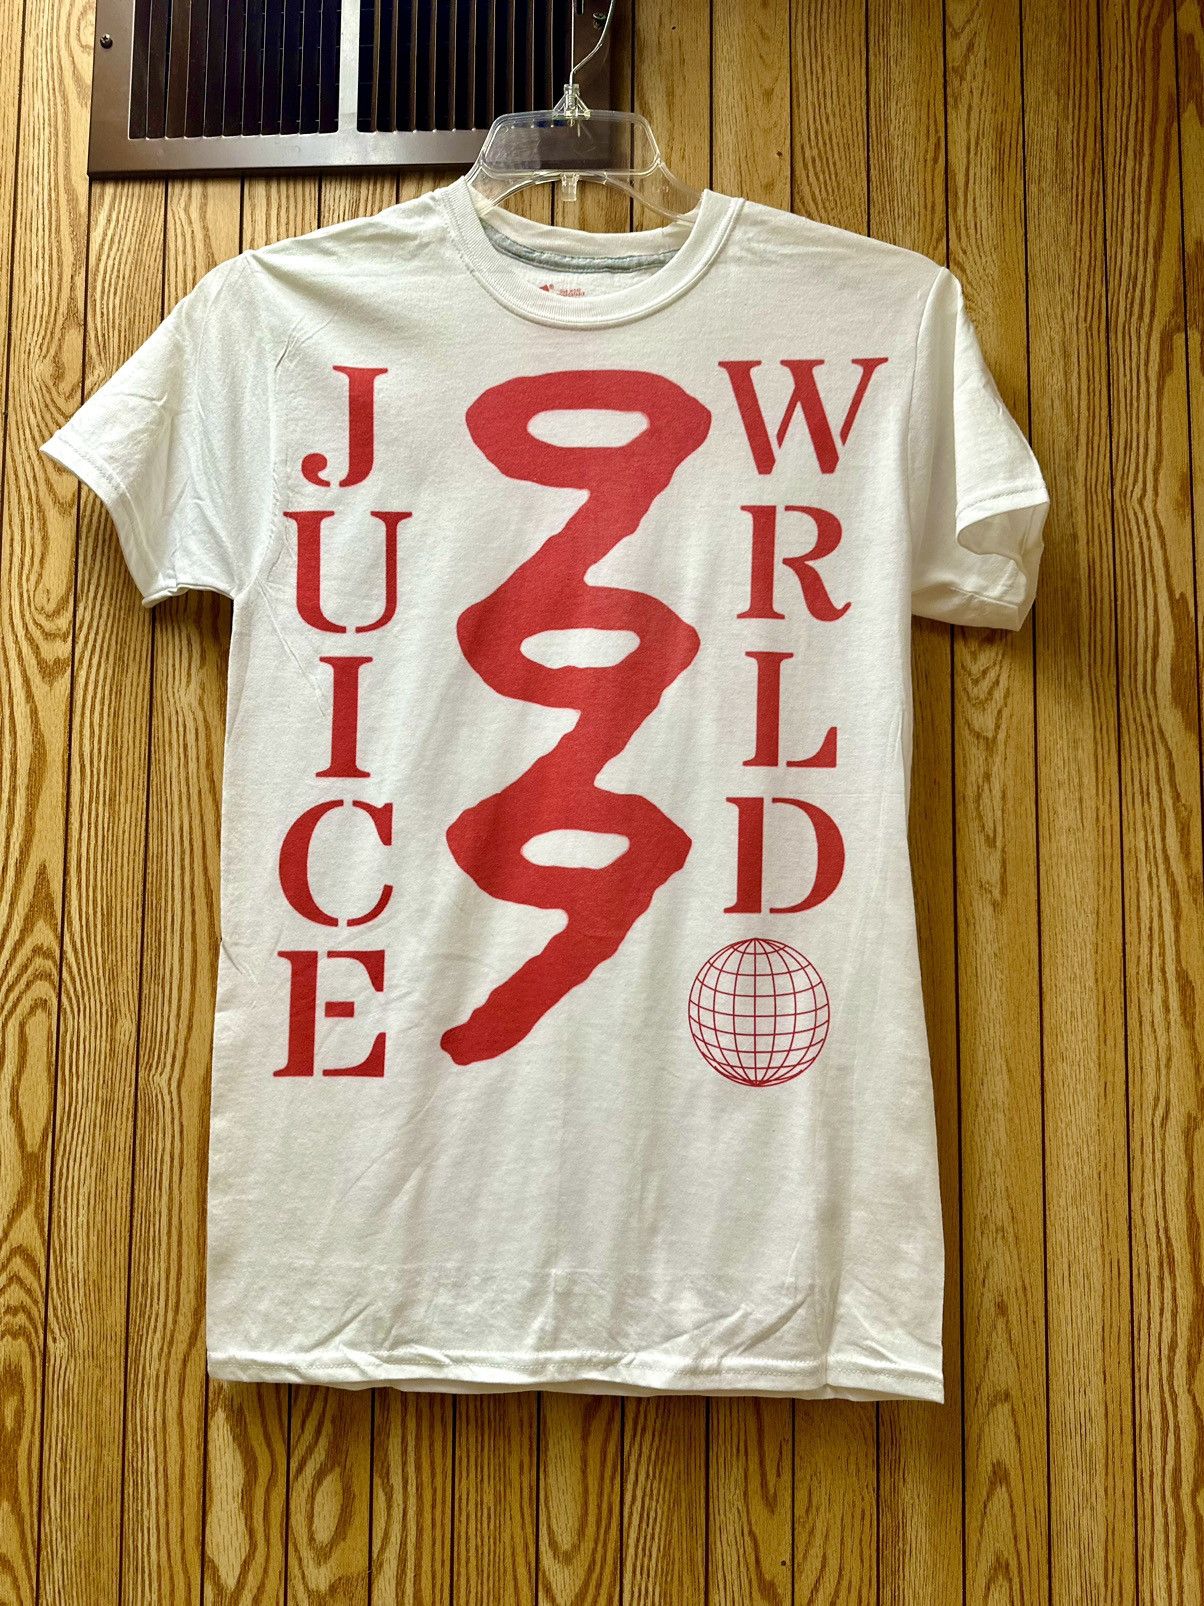 999 Club by Juice Wrld Remain Positive T-Shirt